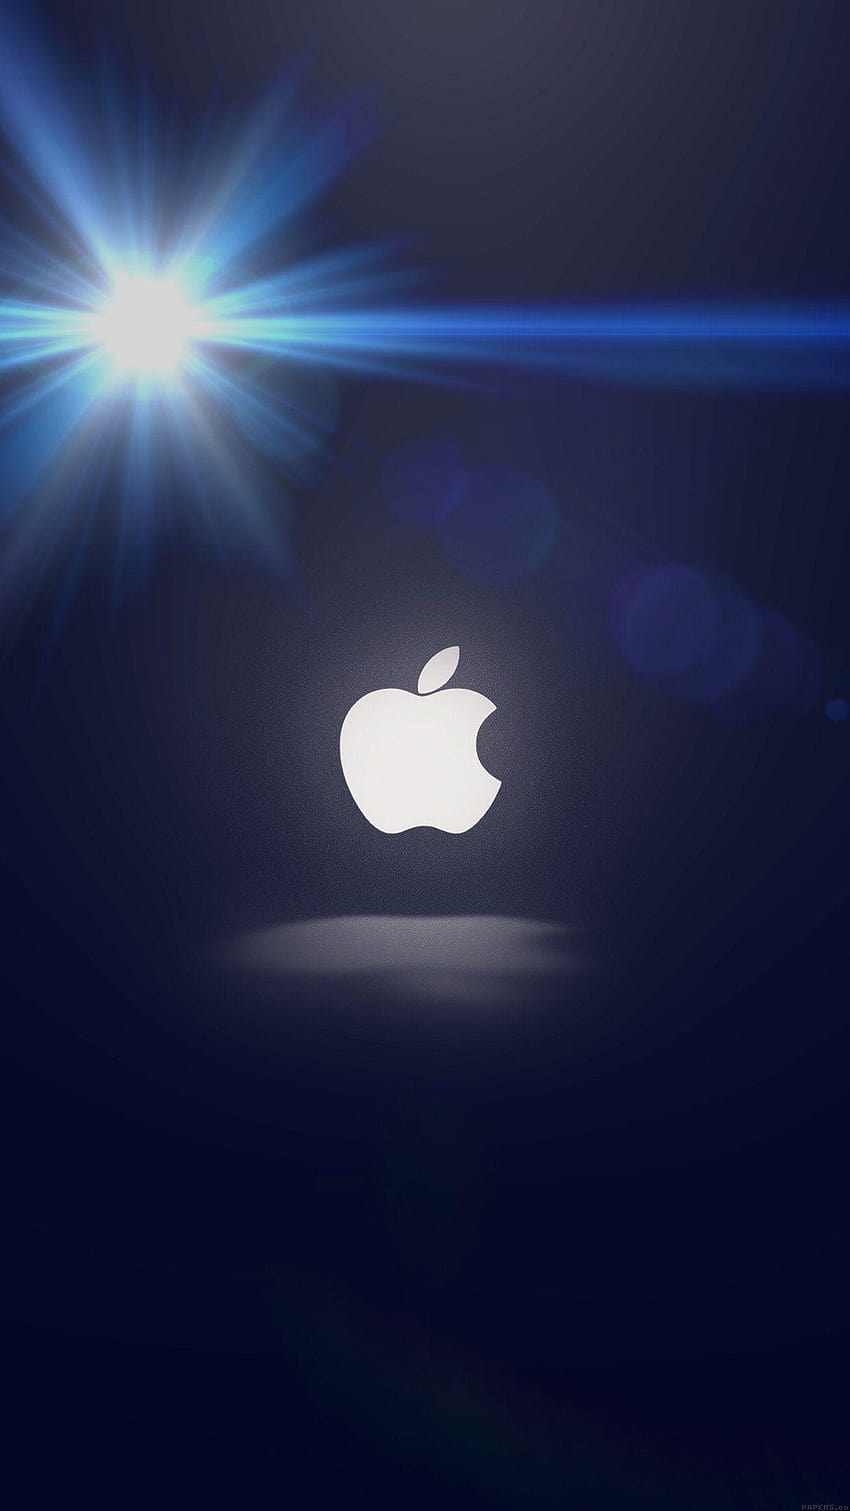 Tema biru tua dengan iphone logo apel putih, logo apple iphone wallpaper ponsel HD